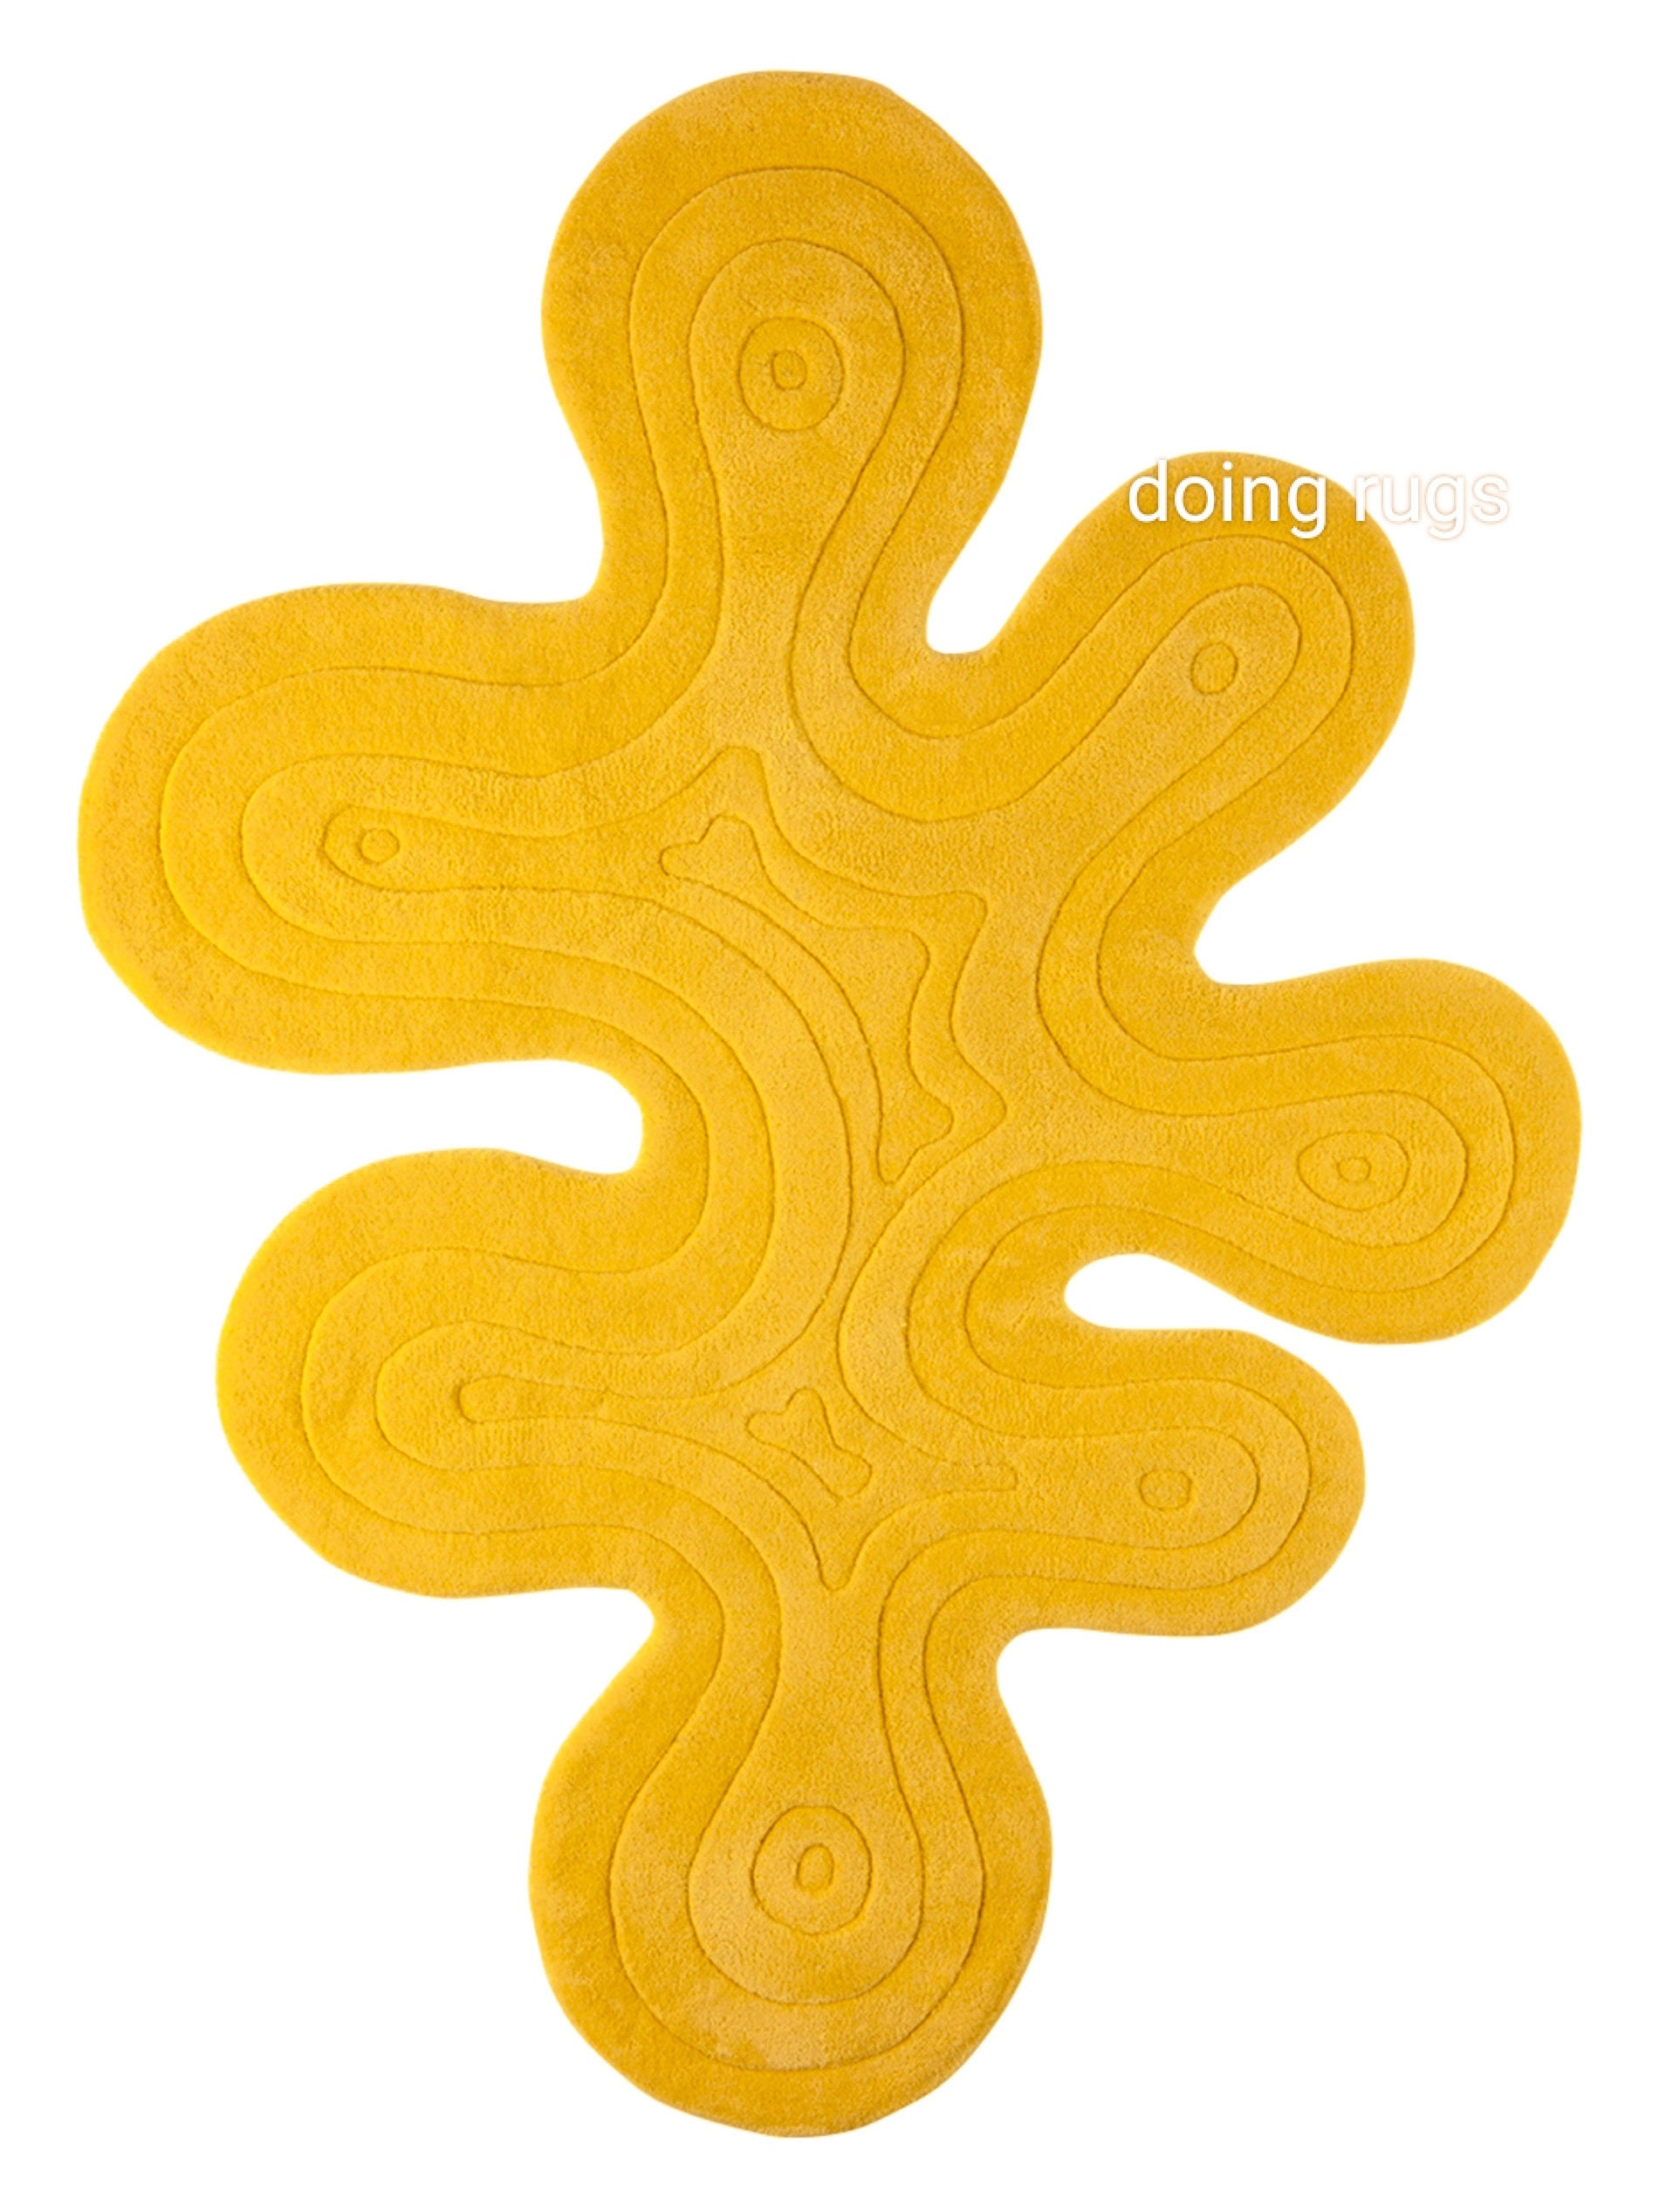 1pc Yellow Orange Shaped Rug 50x80cm (19.7x31.5inch), Soft